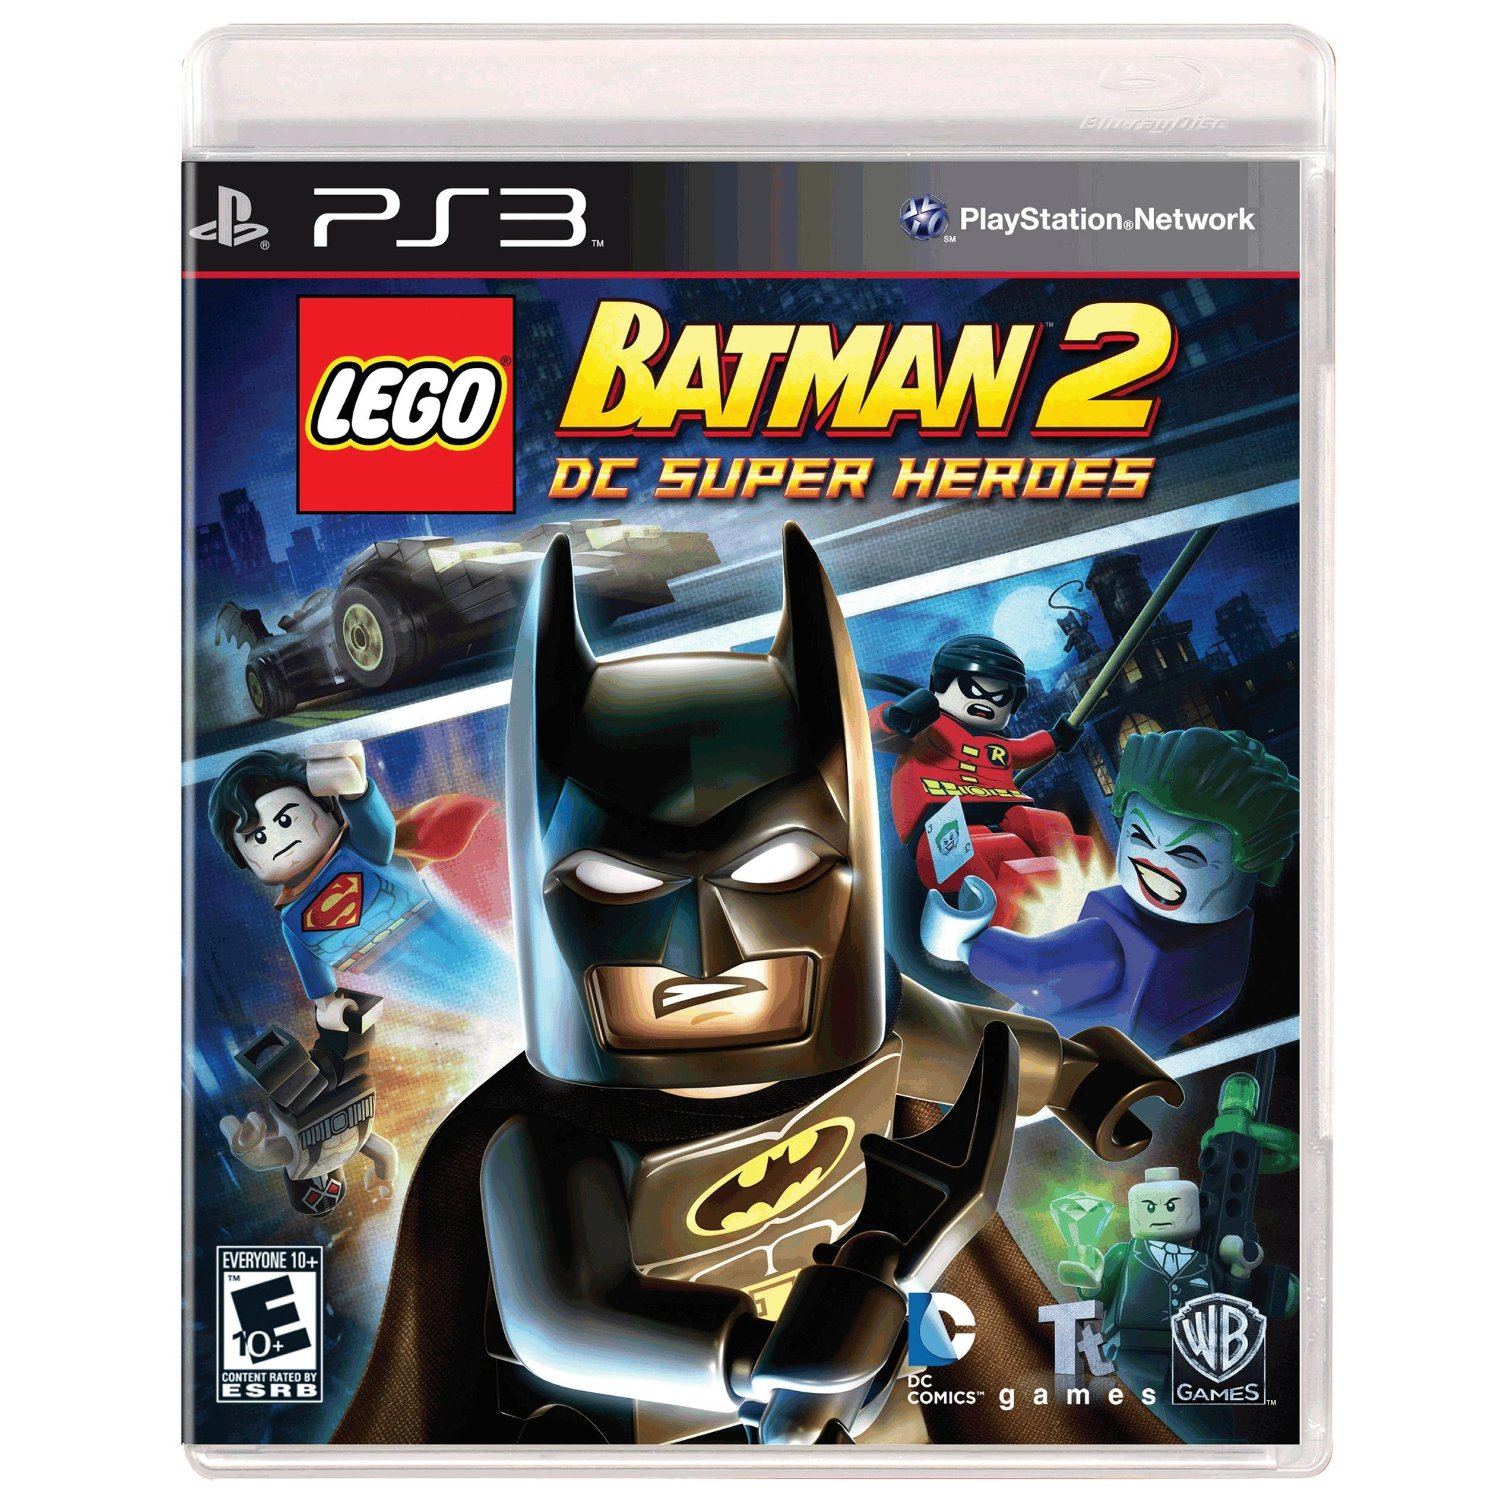 LEGO Batman 2: DC Super Heroes for PlayStation